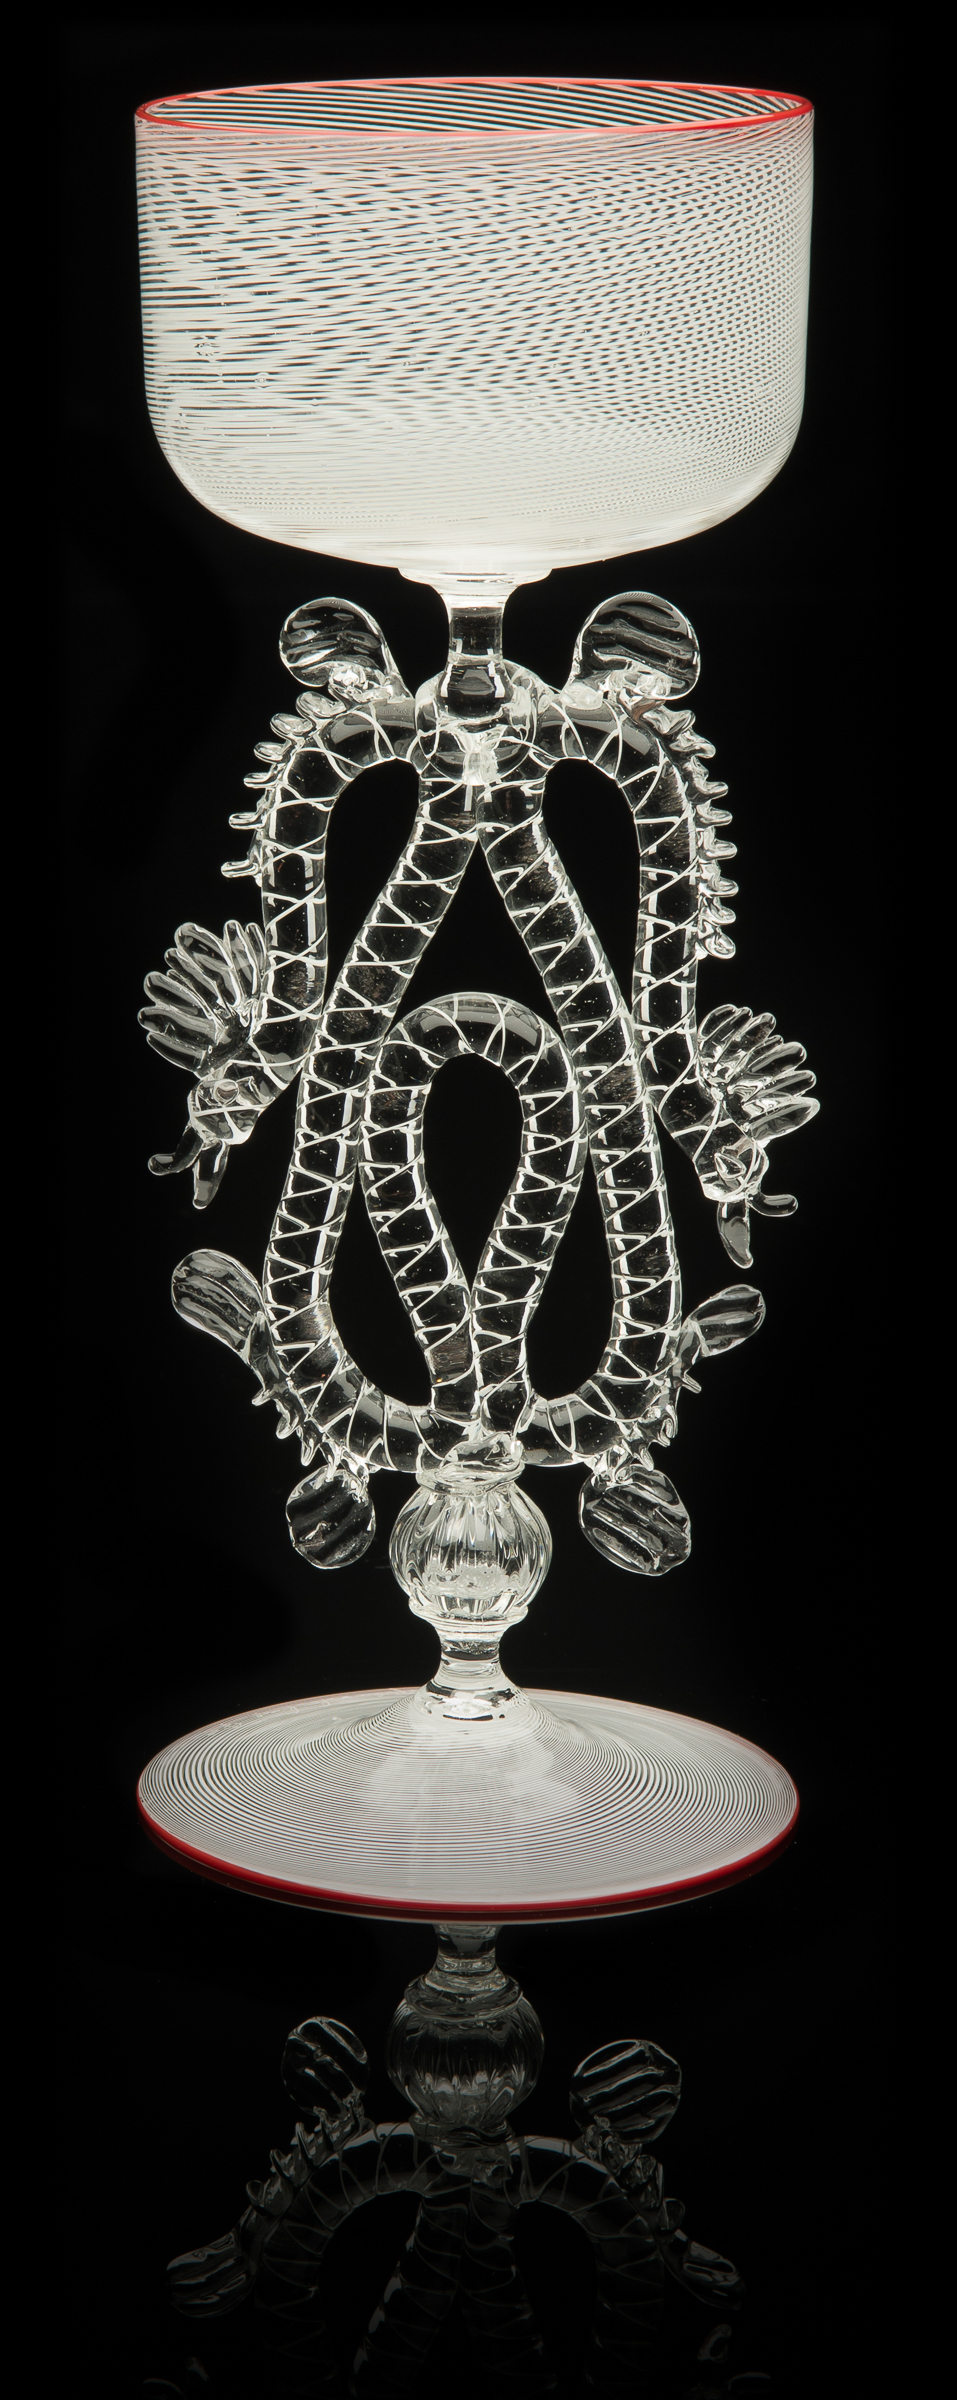  Lino Tagliapietra,&nbsp; Serpent-stem Goblet&nbsp; (1991-1994, glass, 9 1/8 x 3 5/8 x 3 5/8 inches), LT.50 